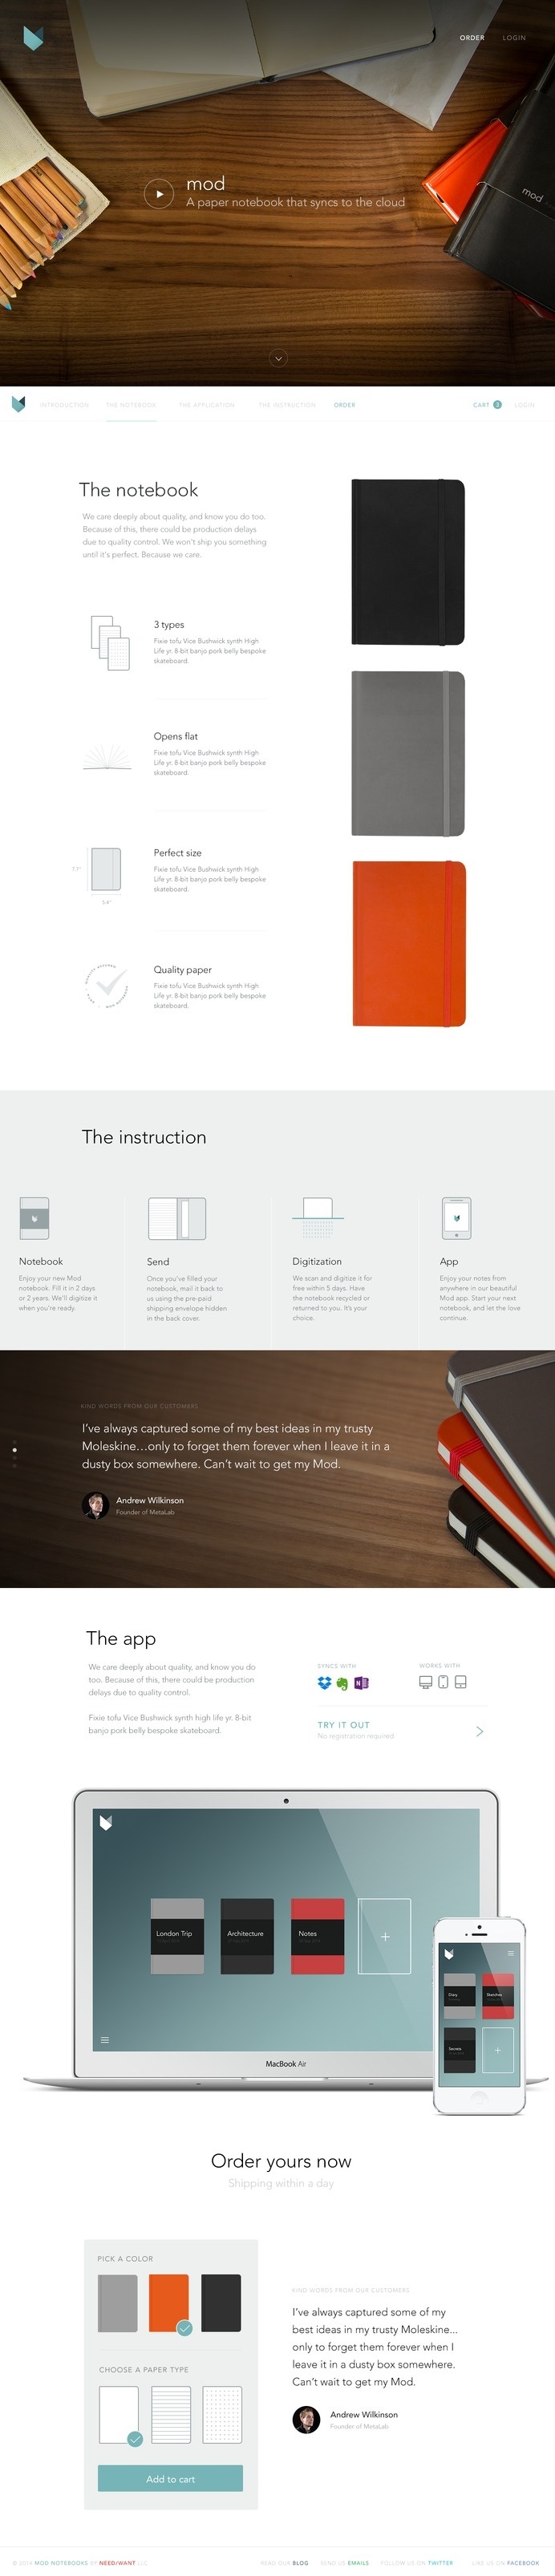 Product Page screen design idea #185: Mod-store-landing #web design #web site #landing page #product site